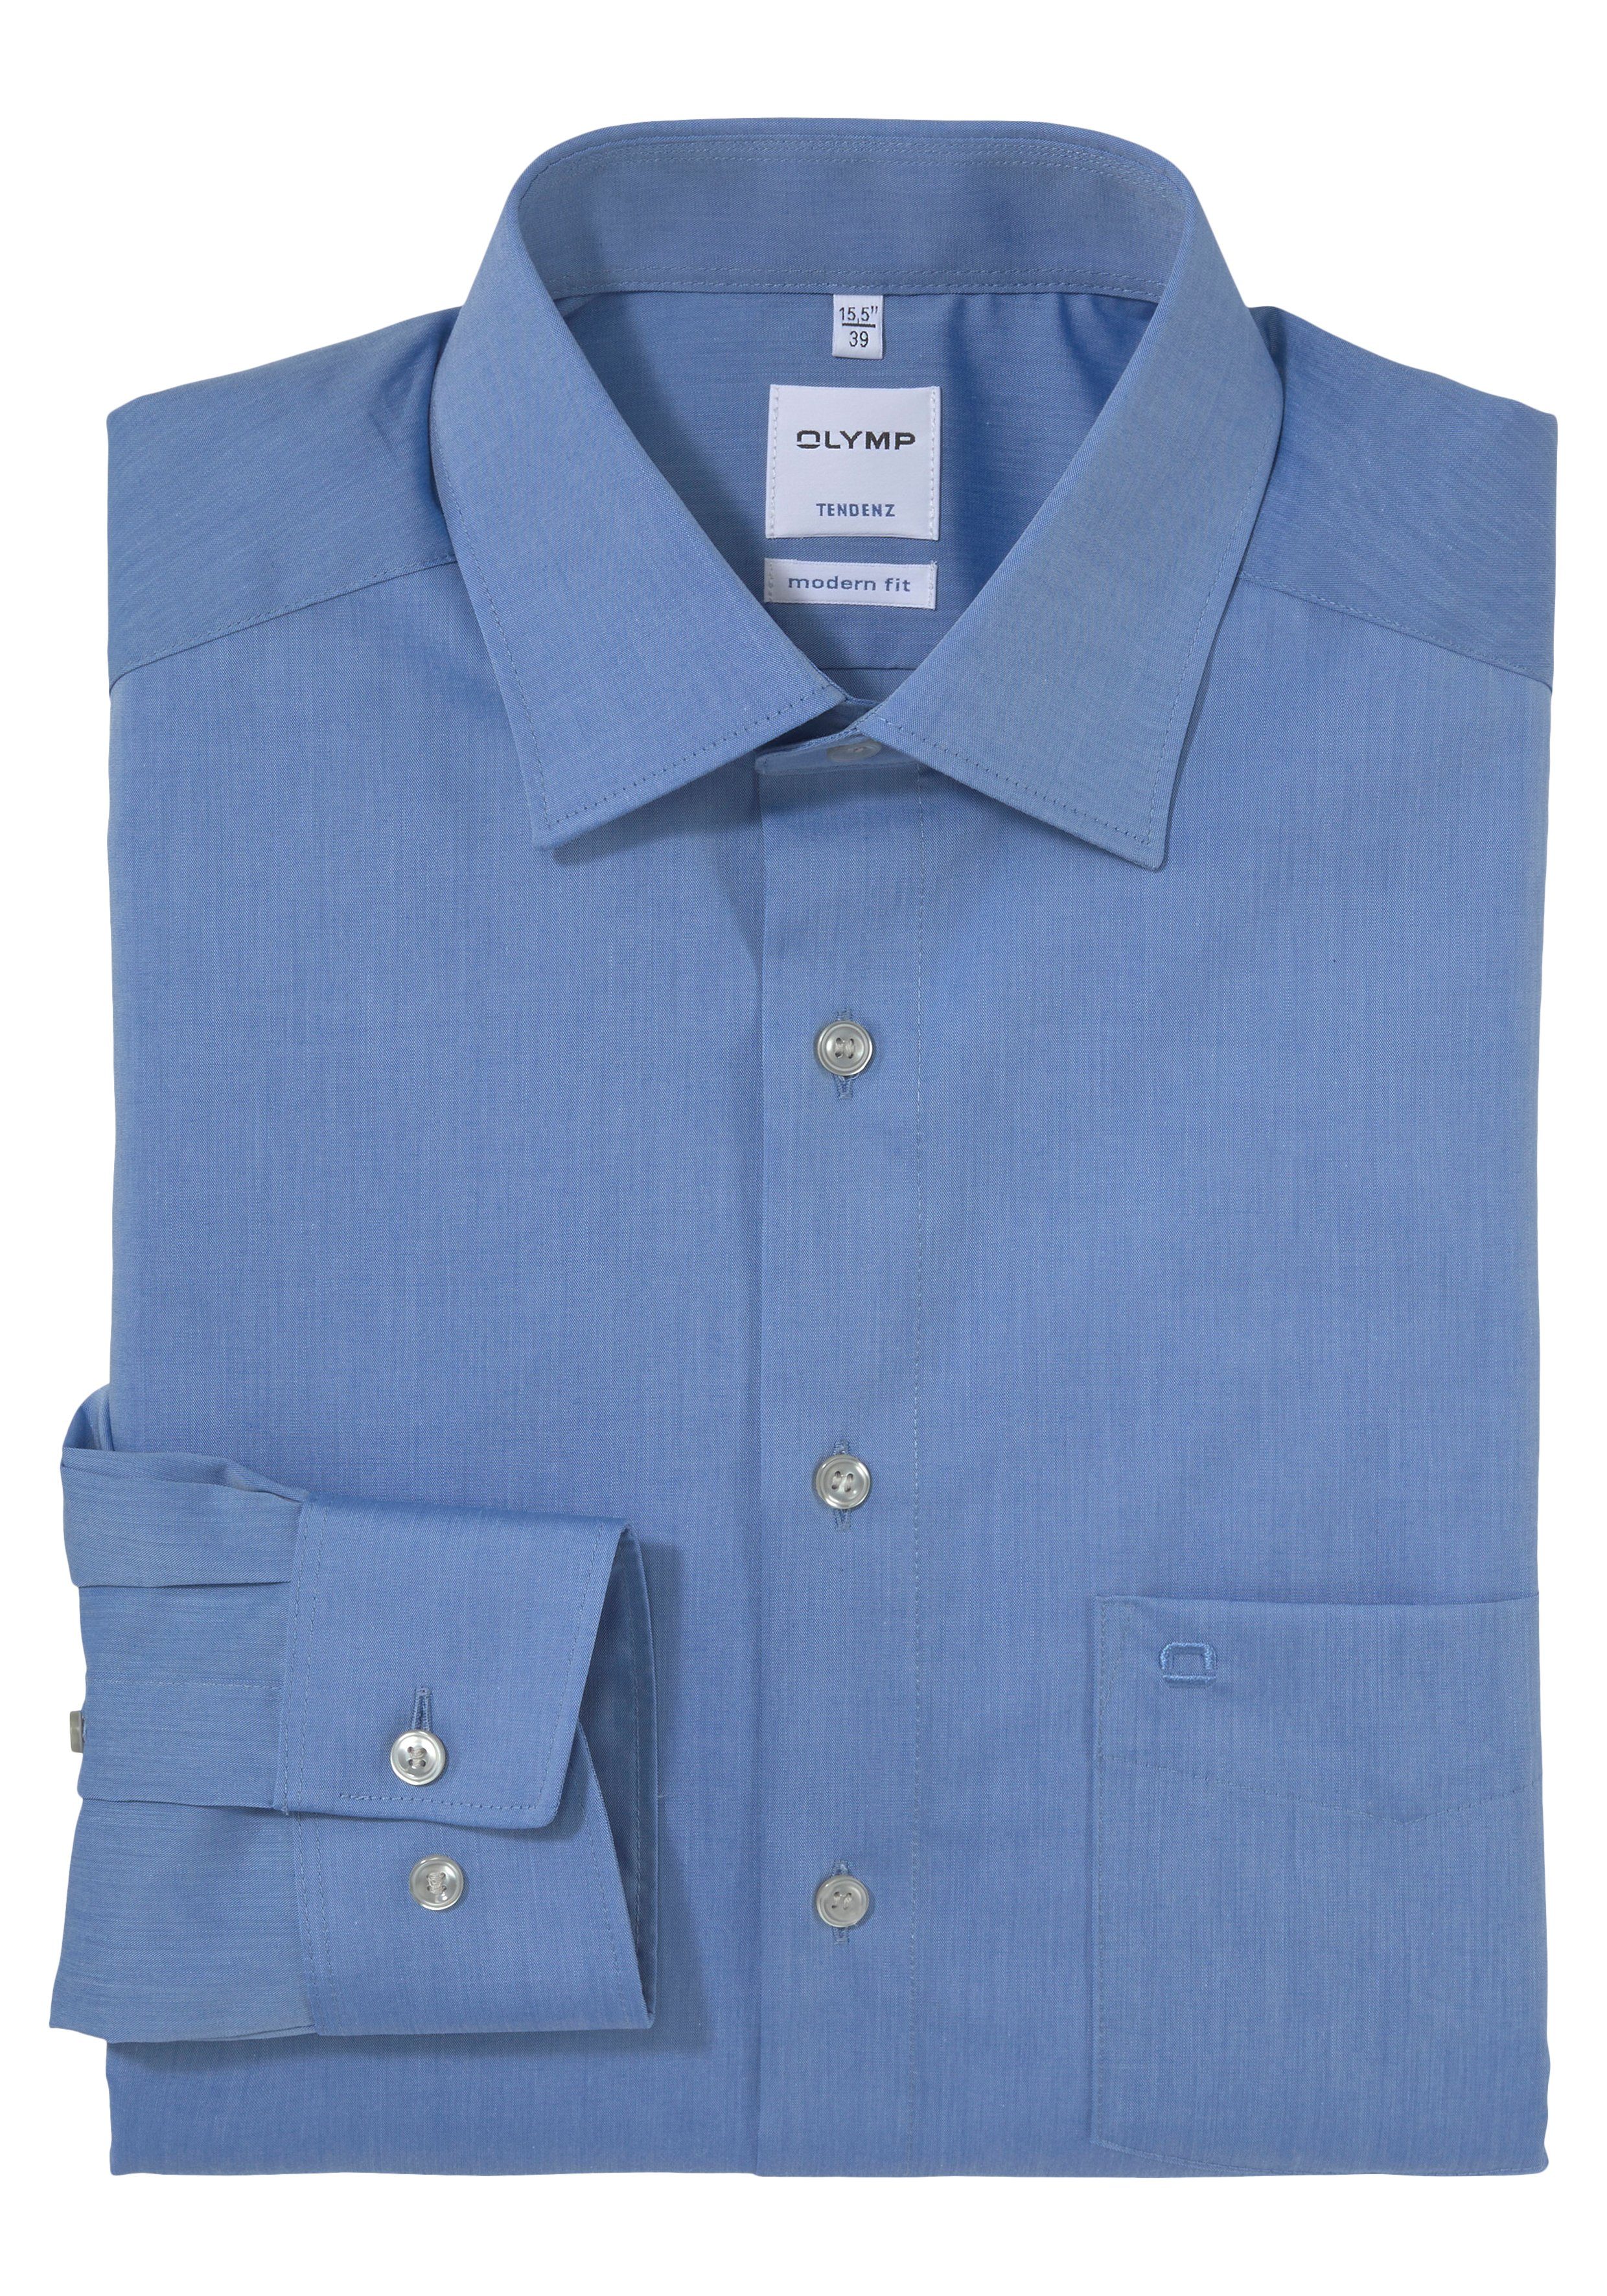 OLYMP Businesshemd Tendenz Modern Fit hellblau | Klassische Hemden